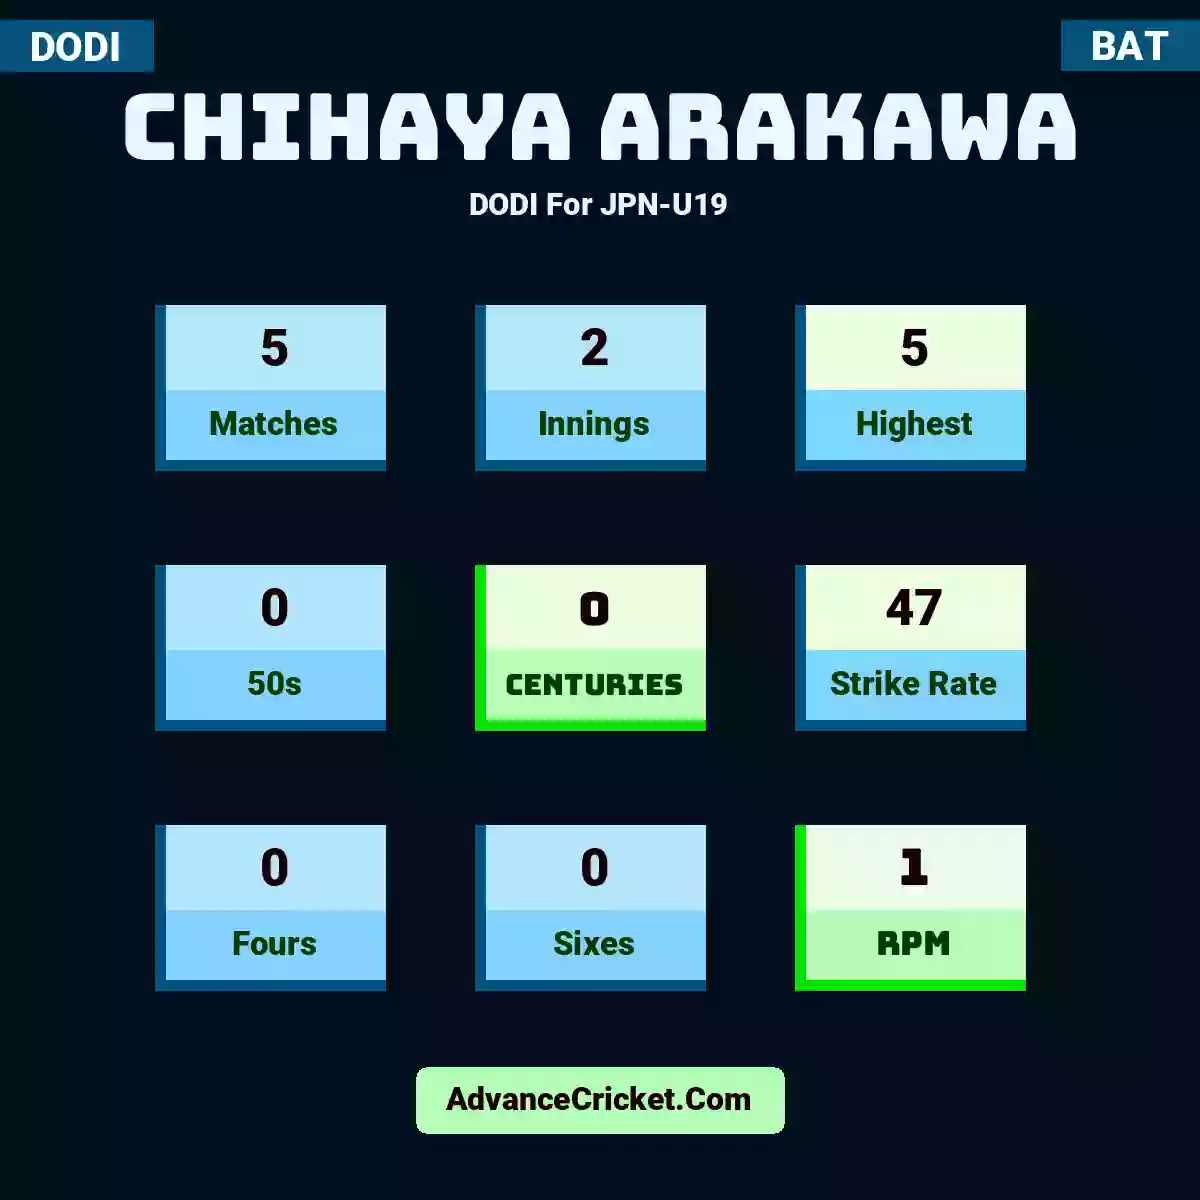 Chihaya Arakawa DODI  For JPN-U19, Chihaya Arakawa played 5 matches, scored 5 runs as highest, 0 half-centuries, and 0 centuries, with a strike rate of 47. C.Arakawa hit 0 fours and 0 sixes, with an RPM of 1.